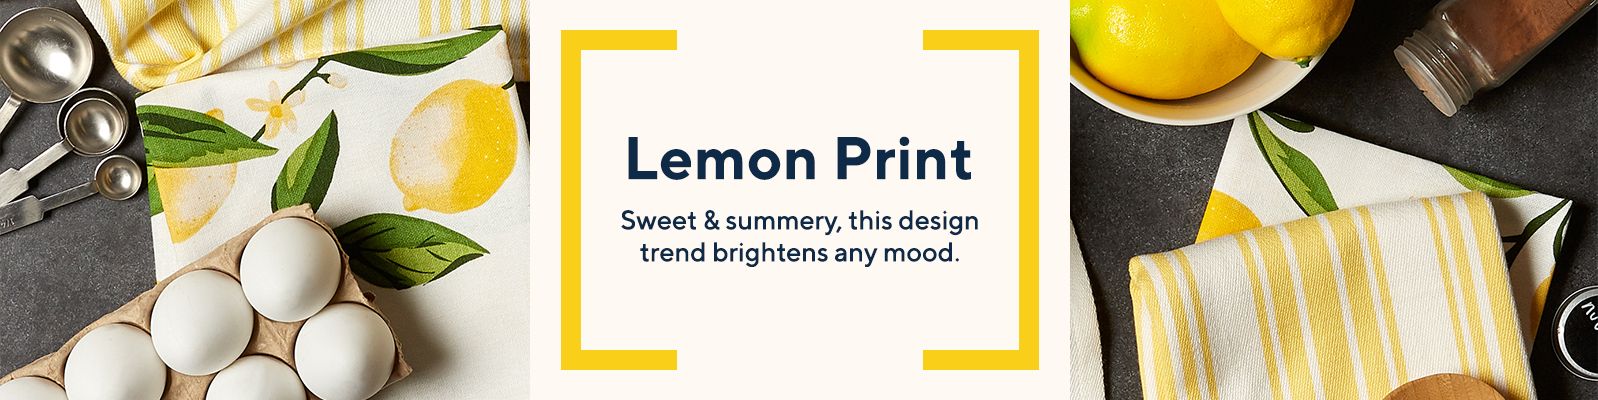 Lemon Print.  Sweet & summery, this design trend brightens any mood.